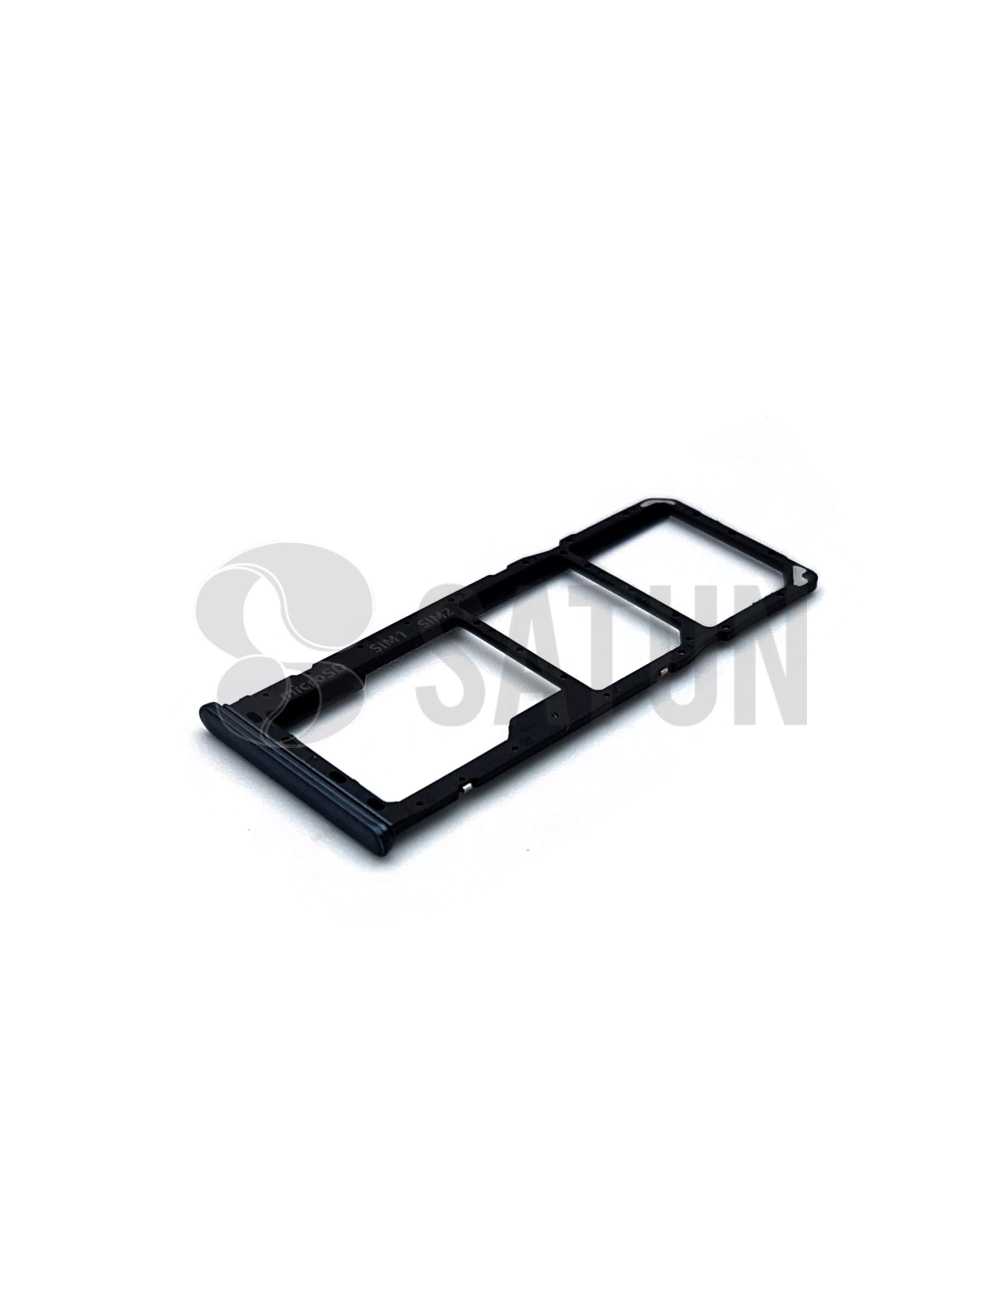 Bandeja Dual SIM y microSD Samsung Galaxy A50 negro